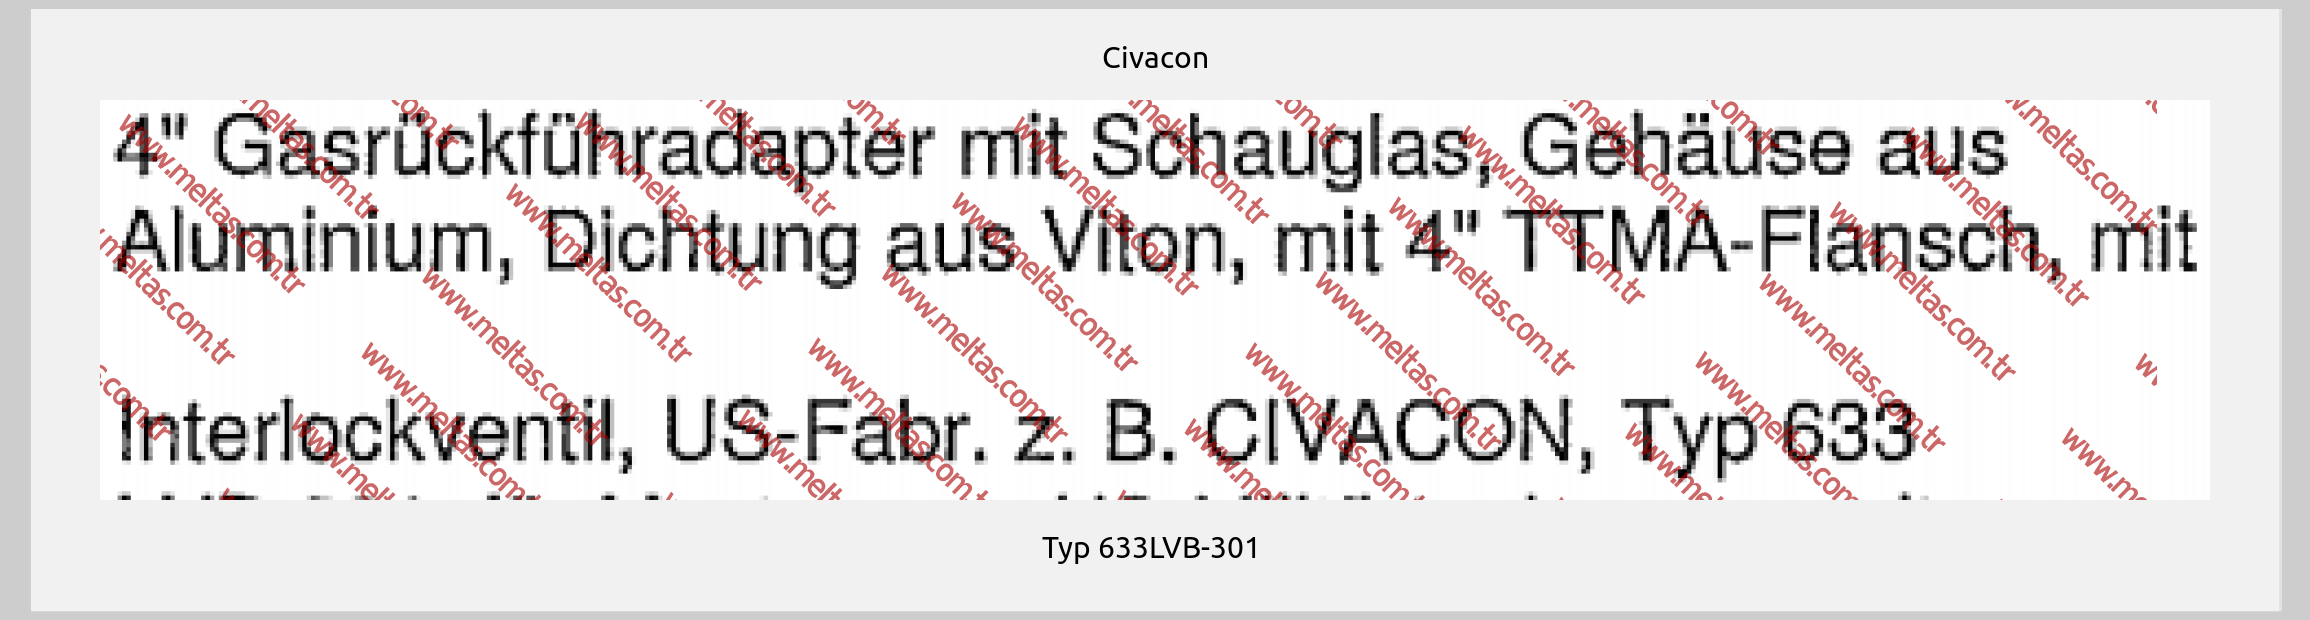 Civacon - Typ 633LVB-301 